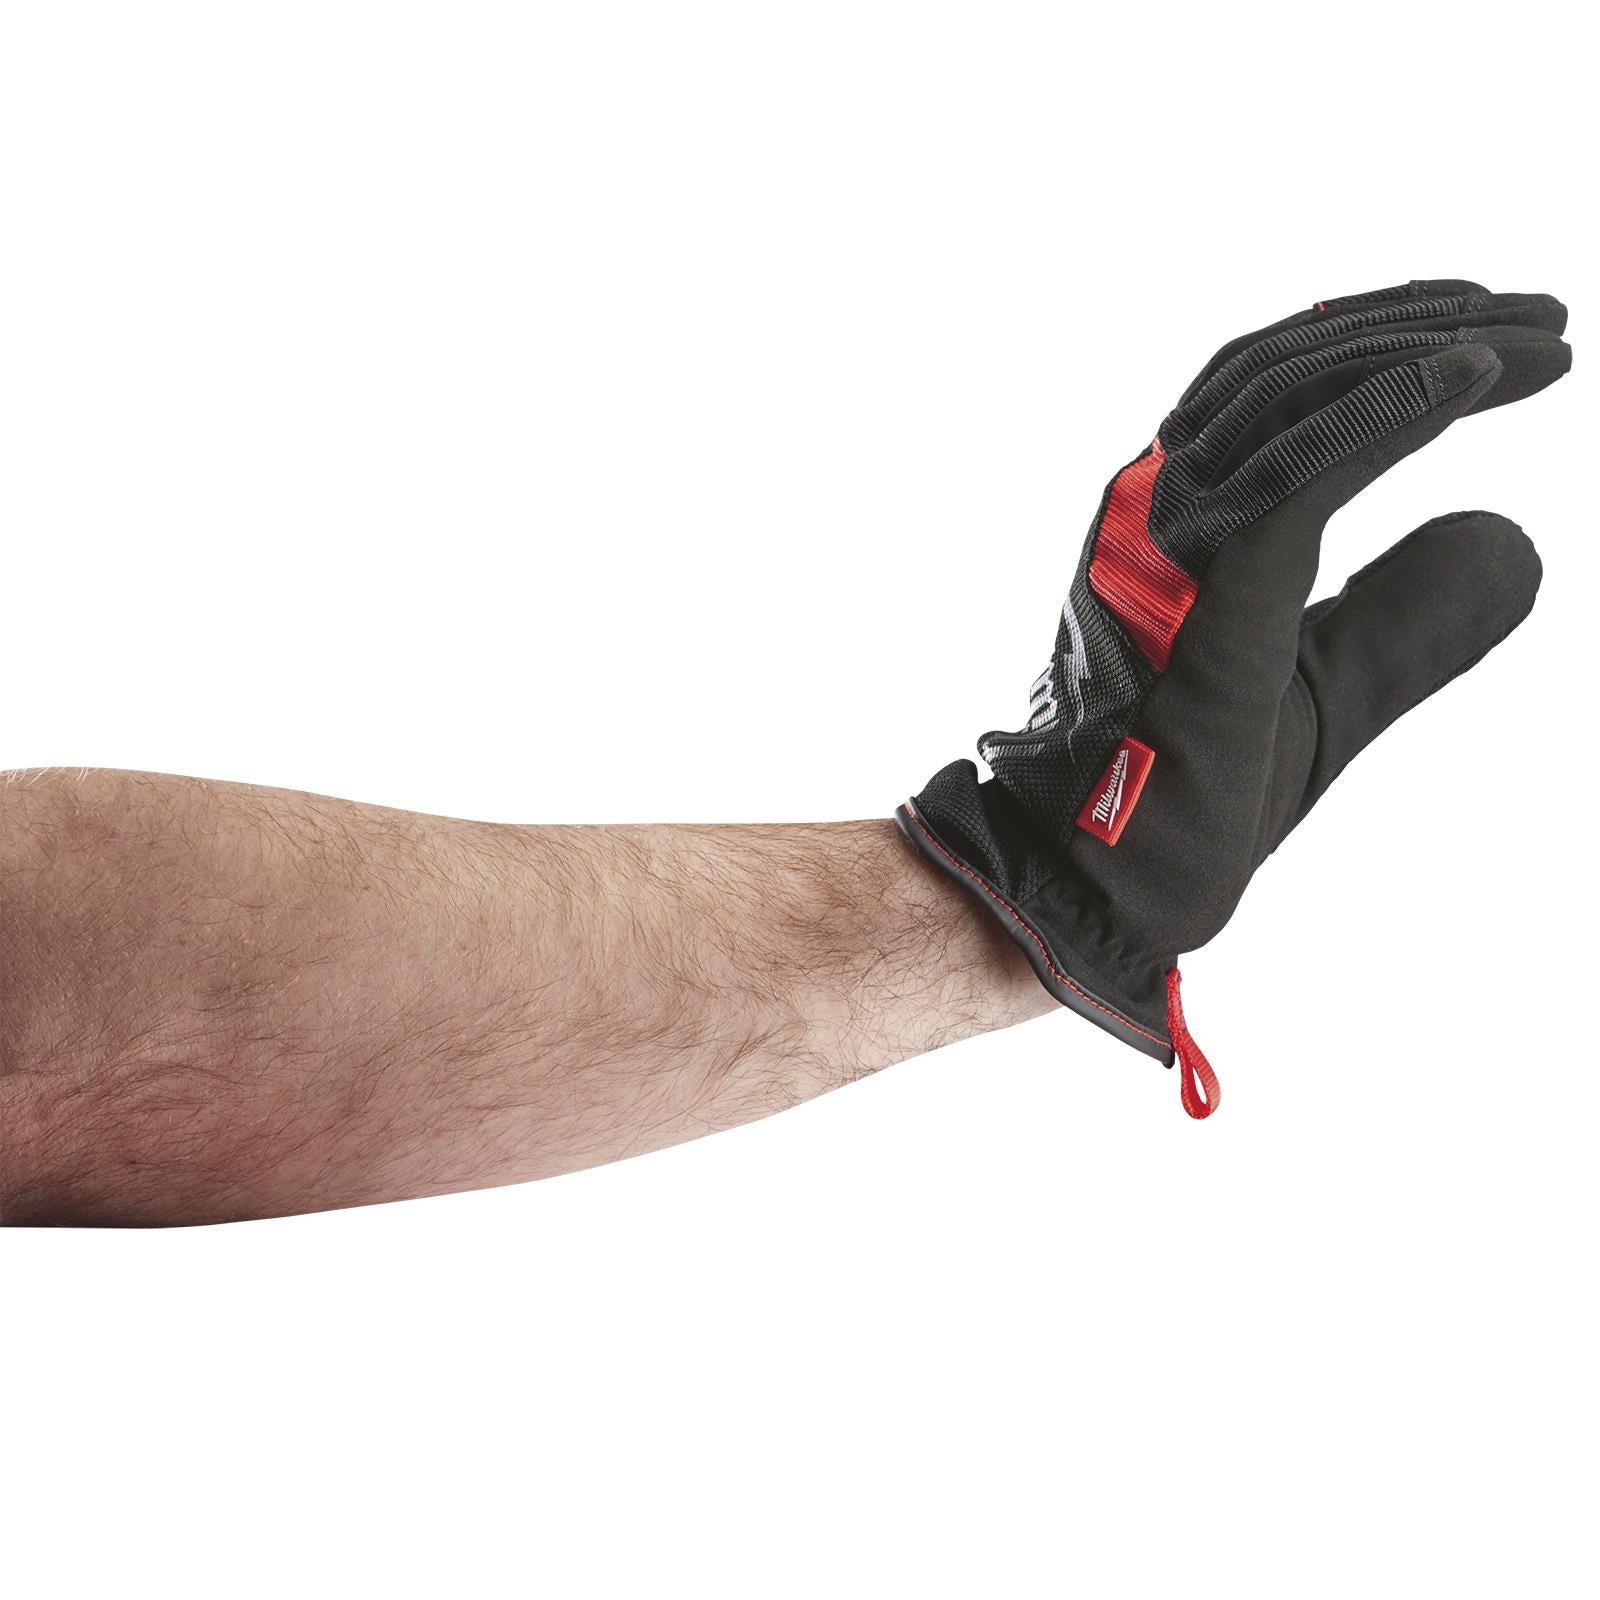 Milwaukee Safety Gloves Free Flex Work Glove Size 11 / XXL Extra Extra Large